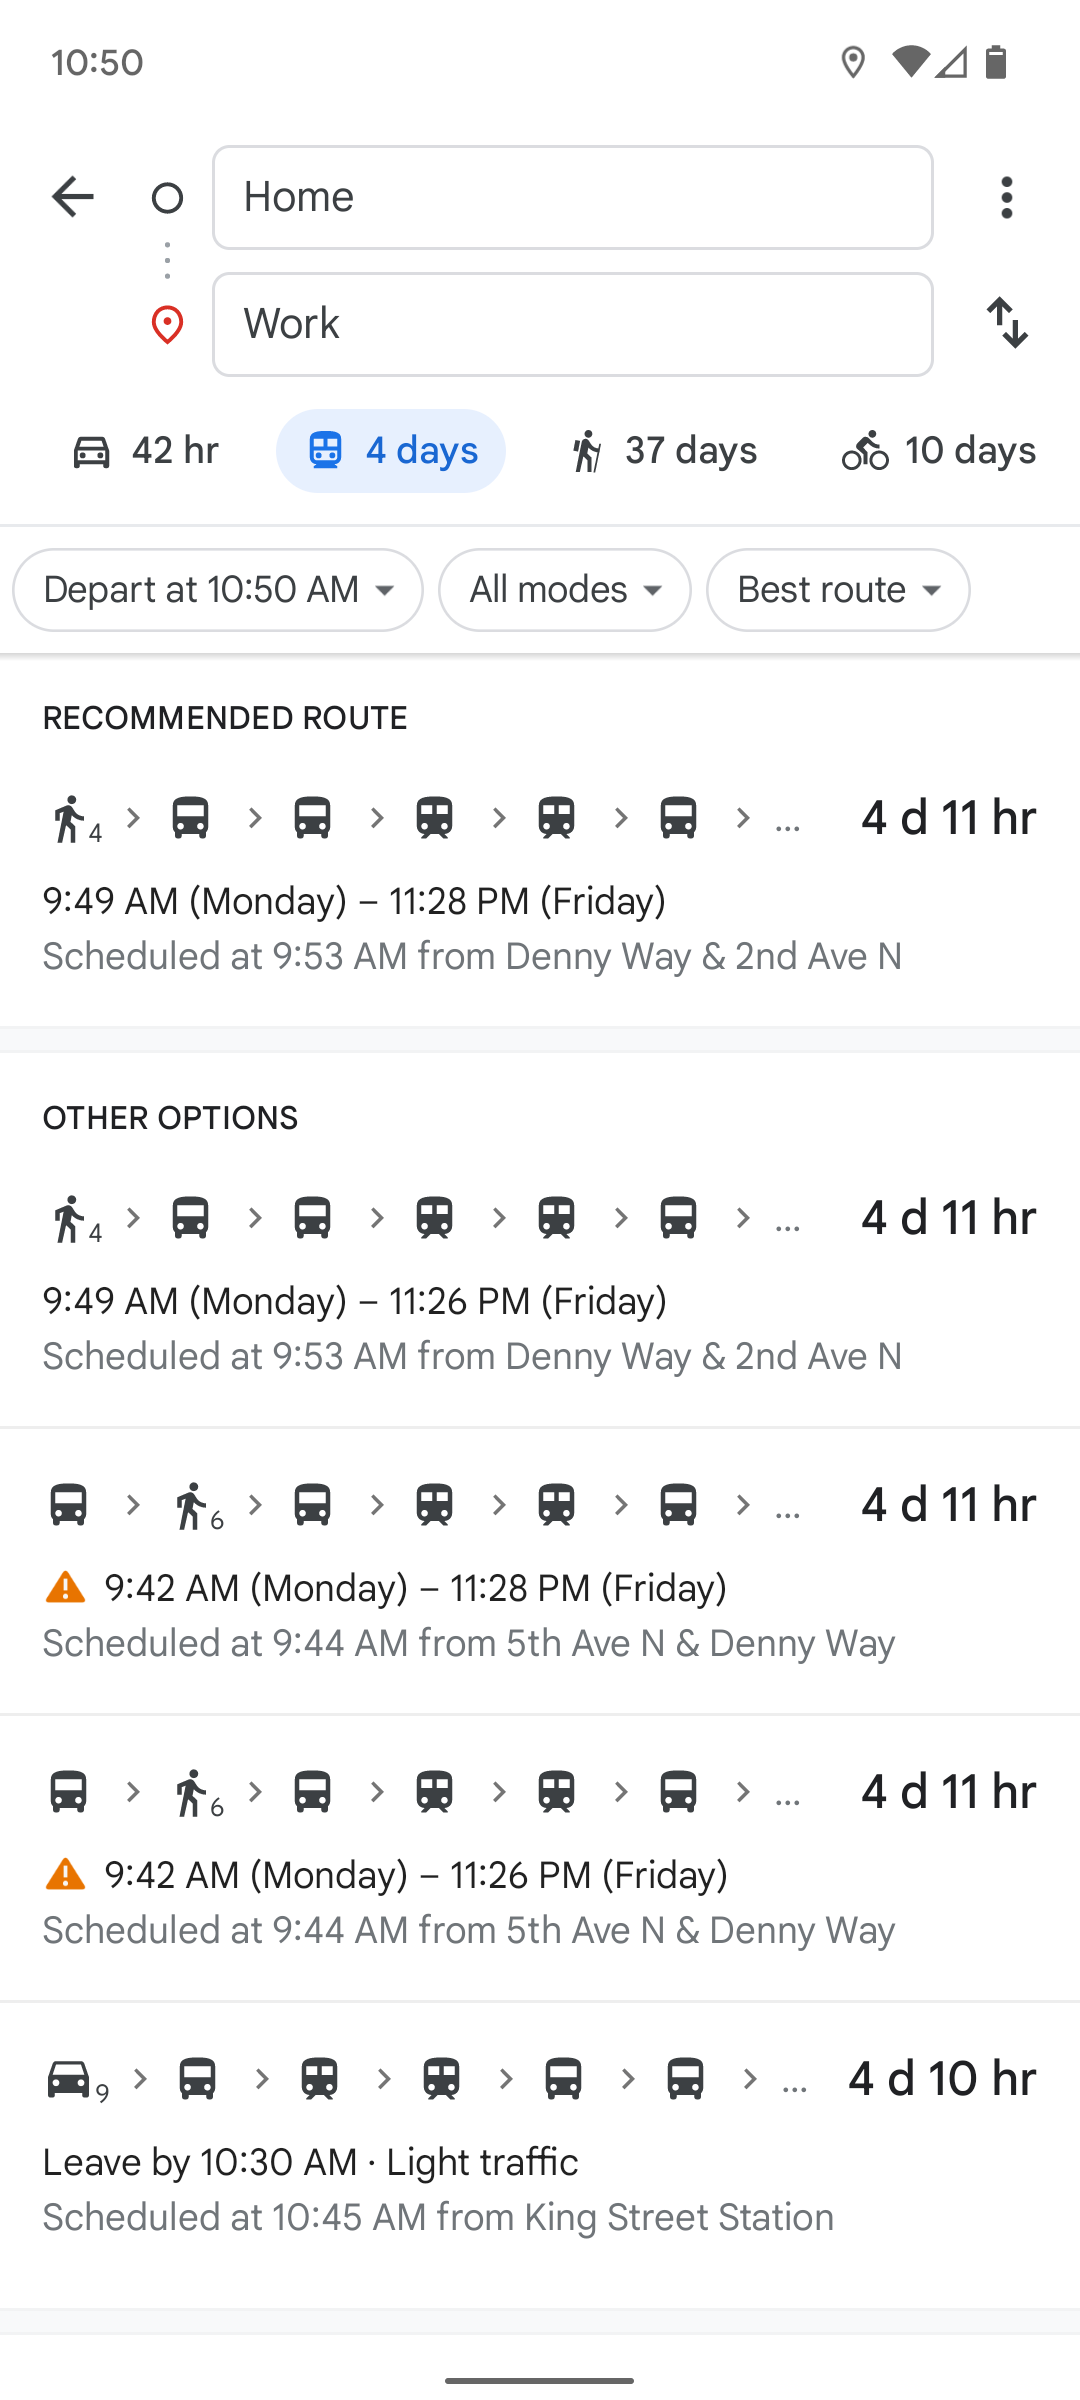 The Google Maps mobile app destination screen showing public transport option.